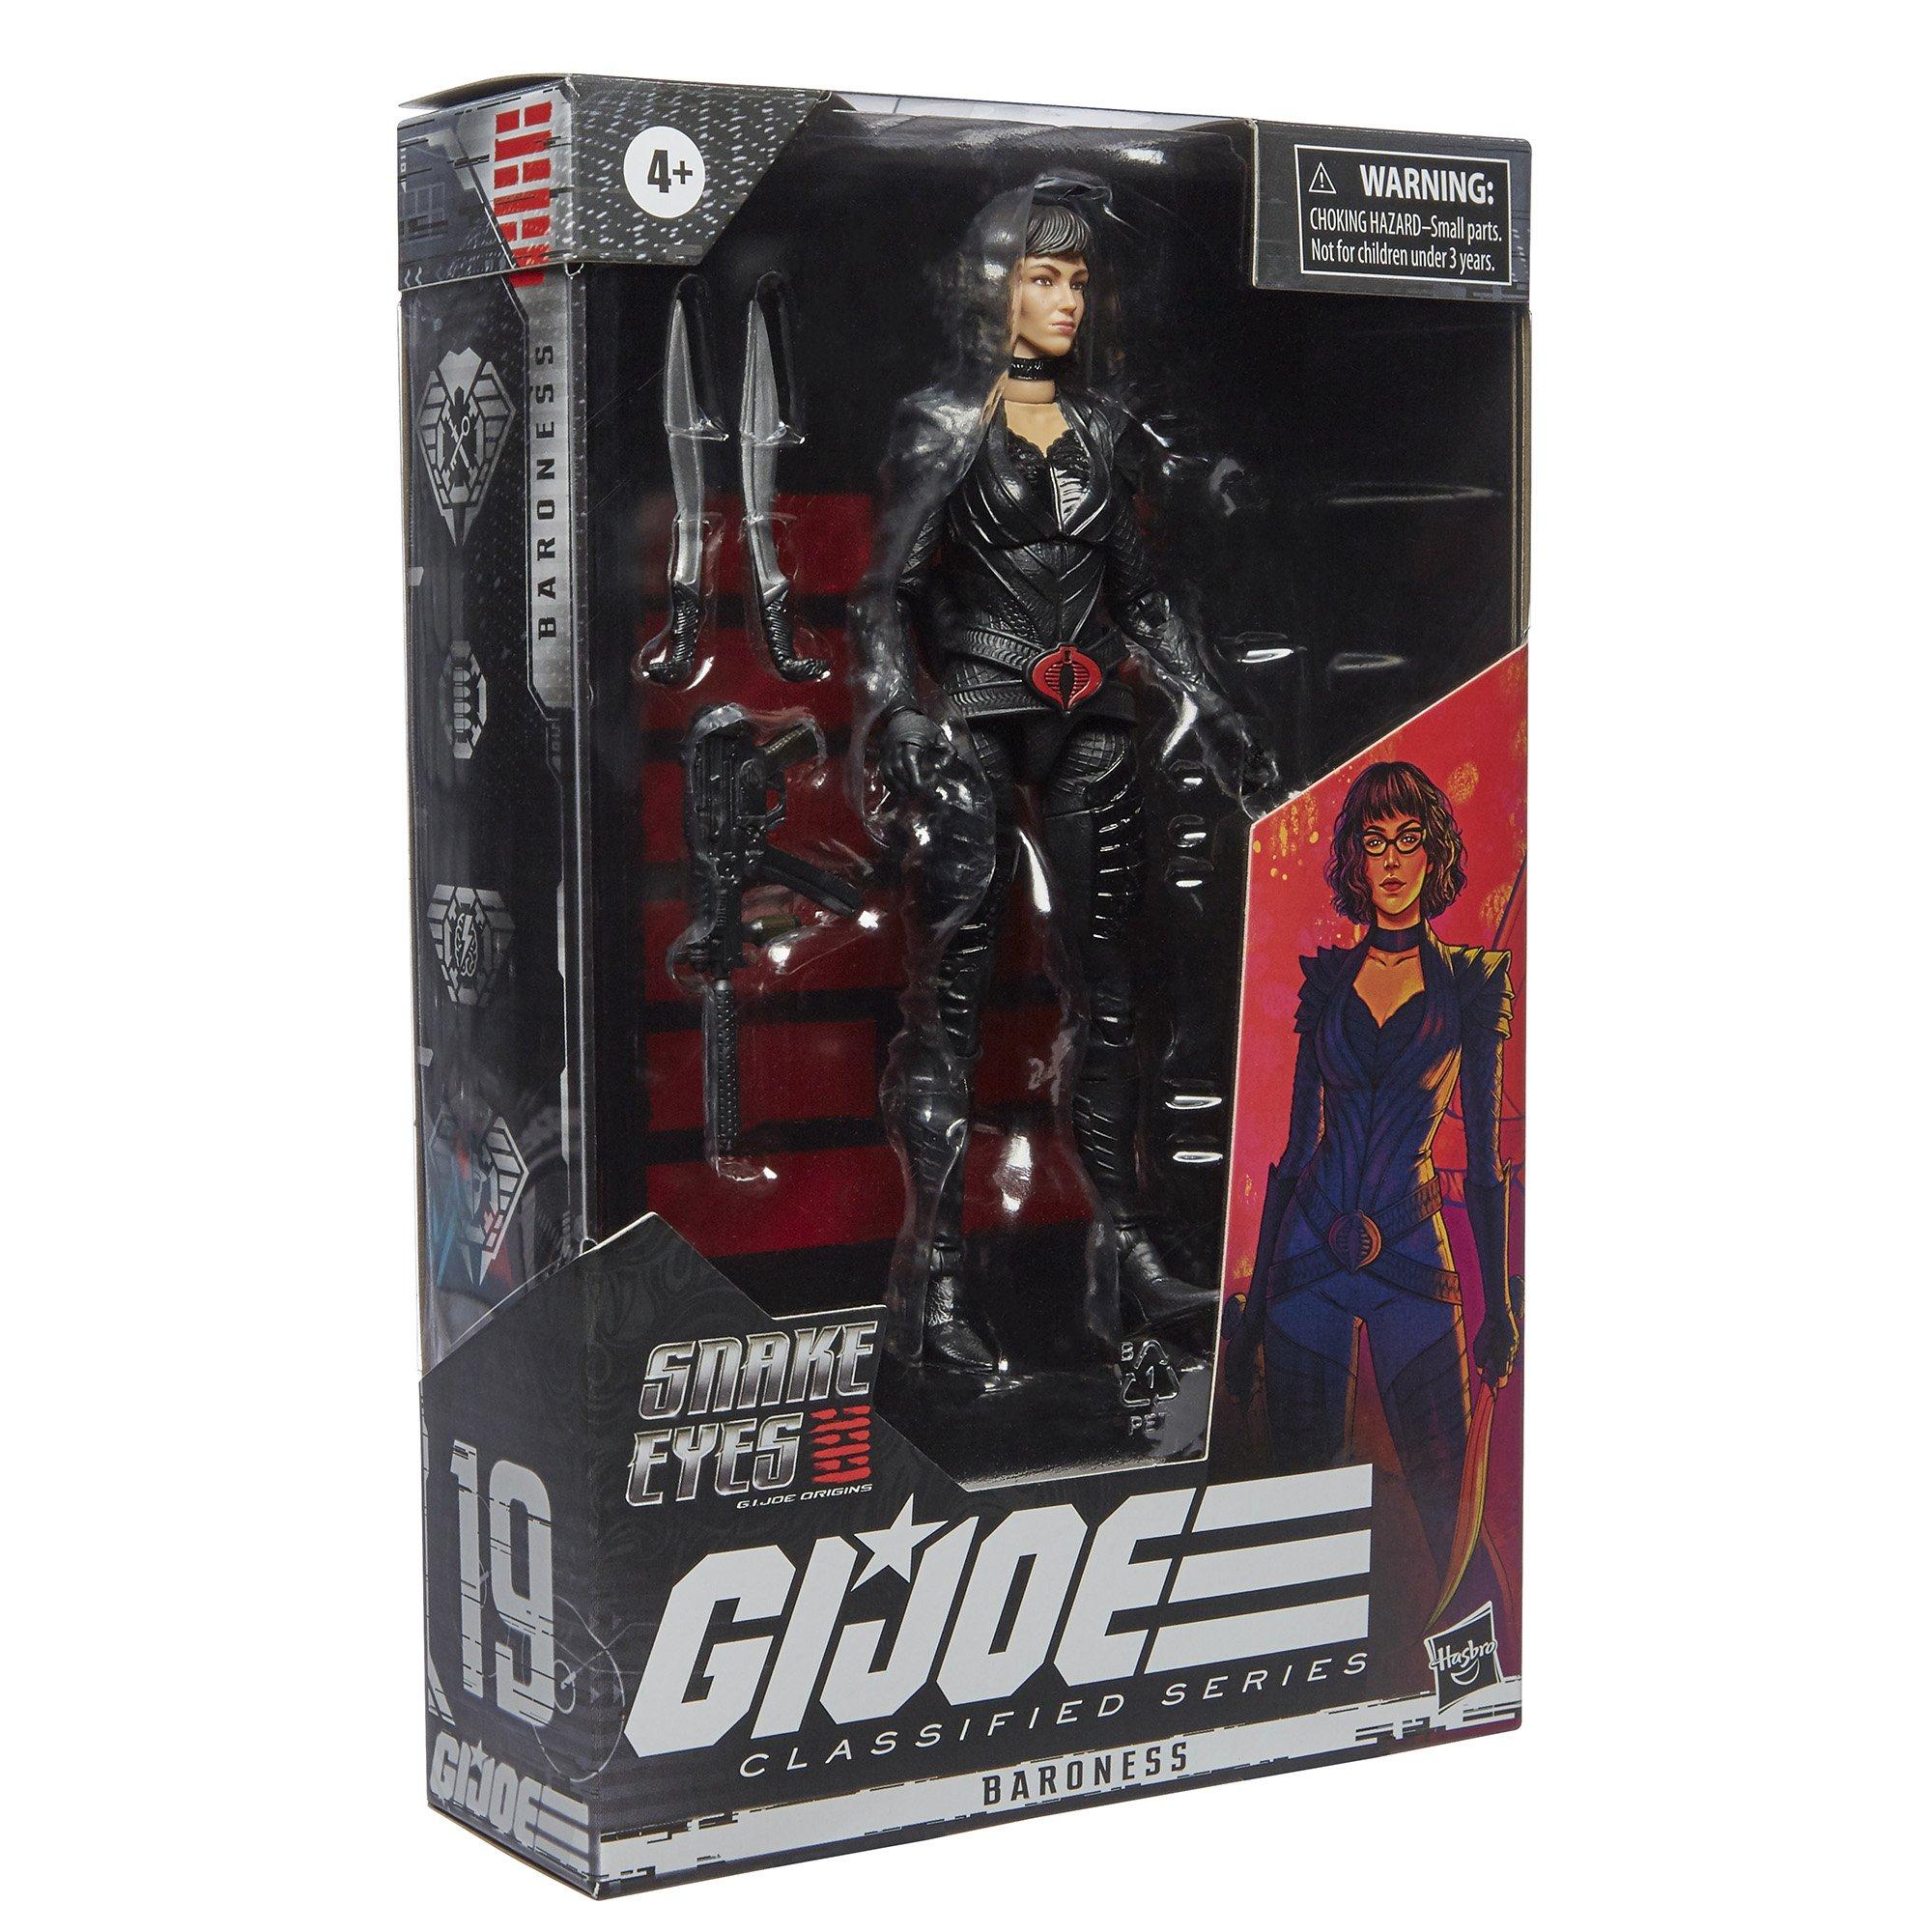 GI Joe Hasbro Classified Series : GI Joe Origins Snake Eyes Action Figure  16, Premium 6-Inch Scale Toy with Custom Package Art , Black